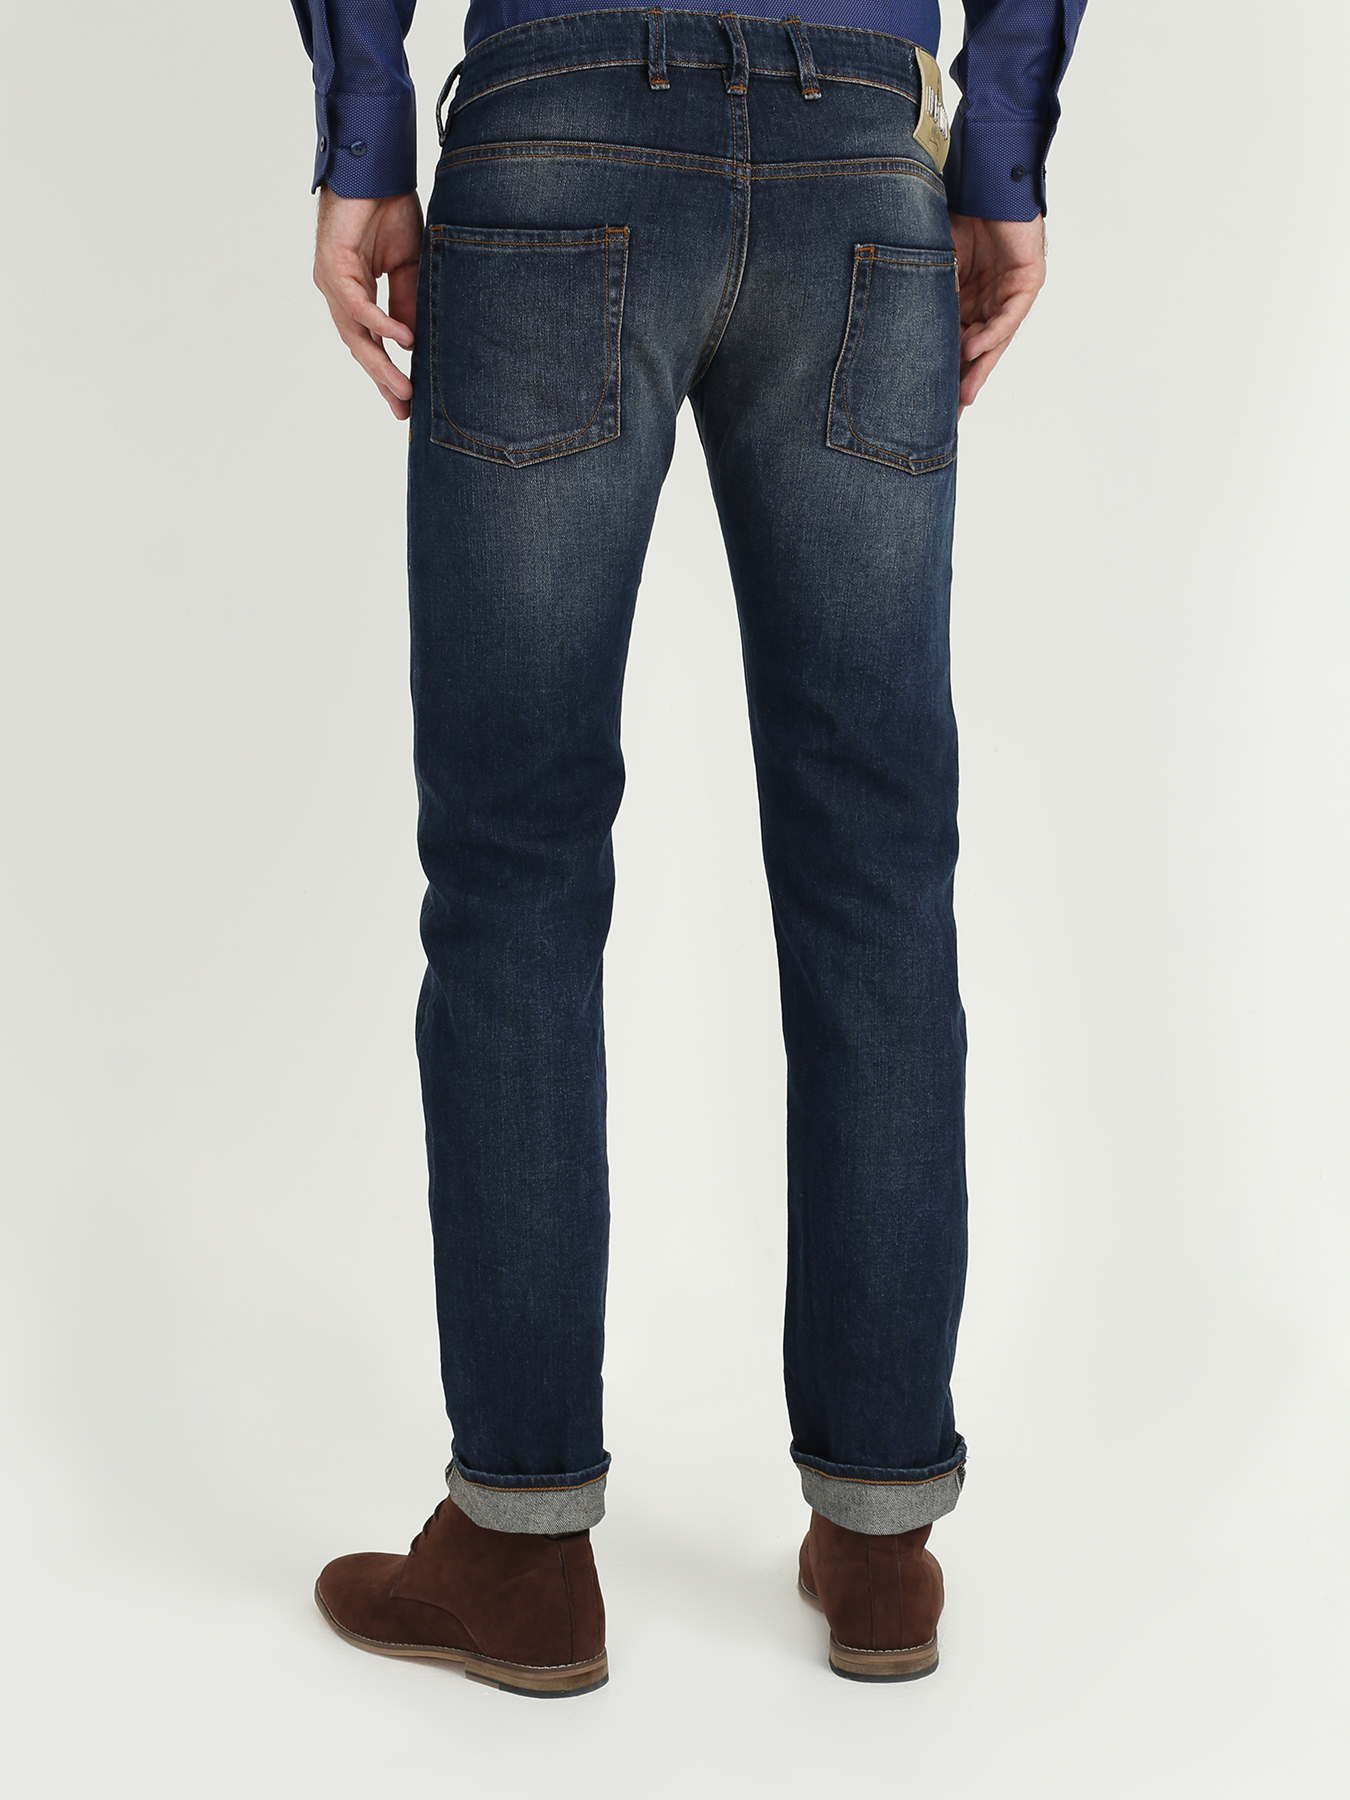 Finisterre Узкие мужские джинсы 322281-014 Фото 2